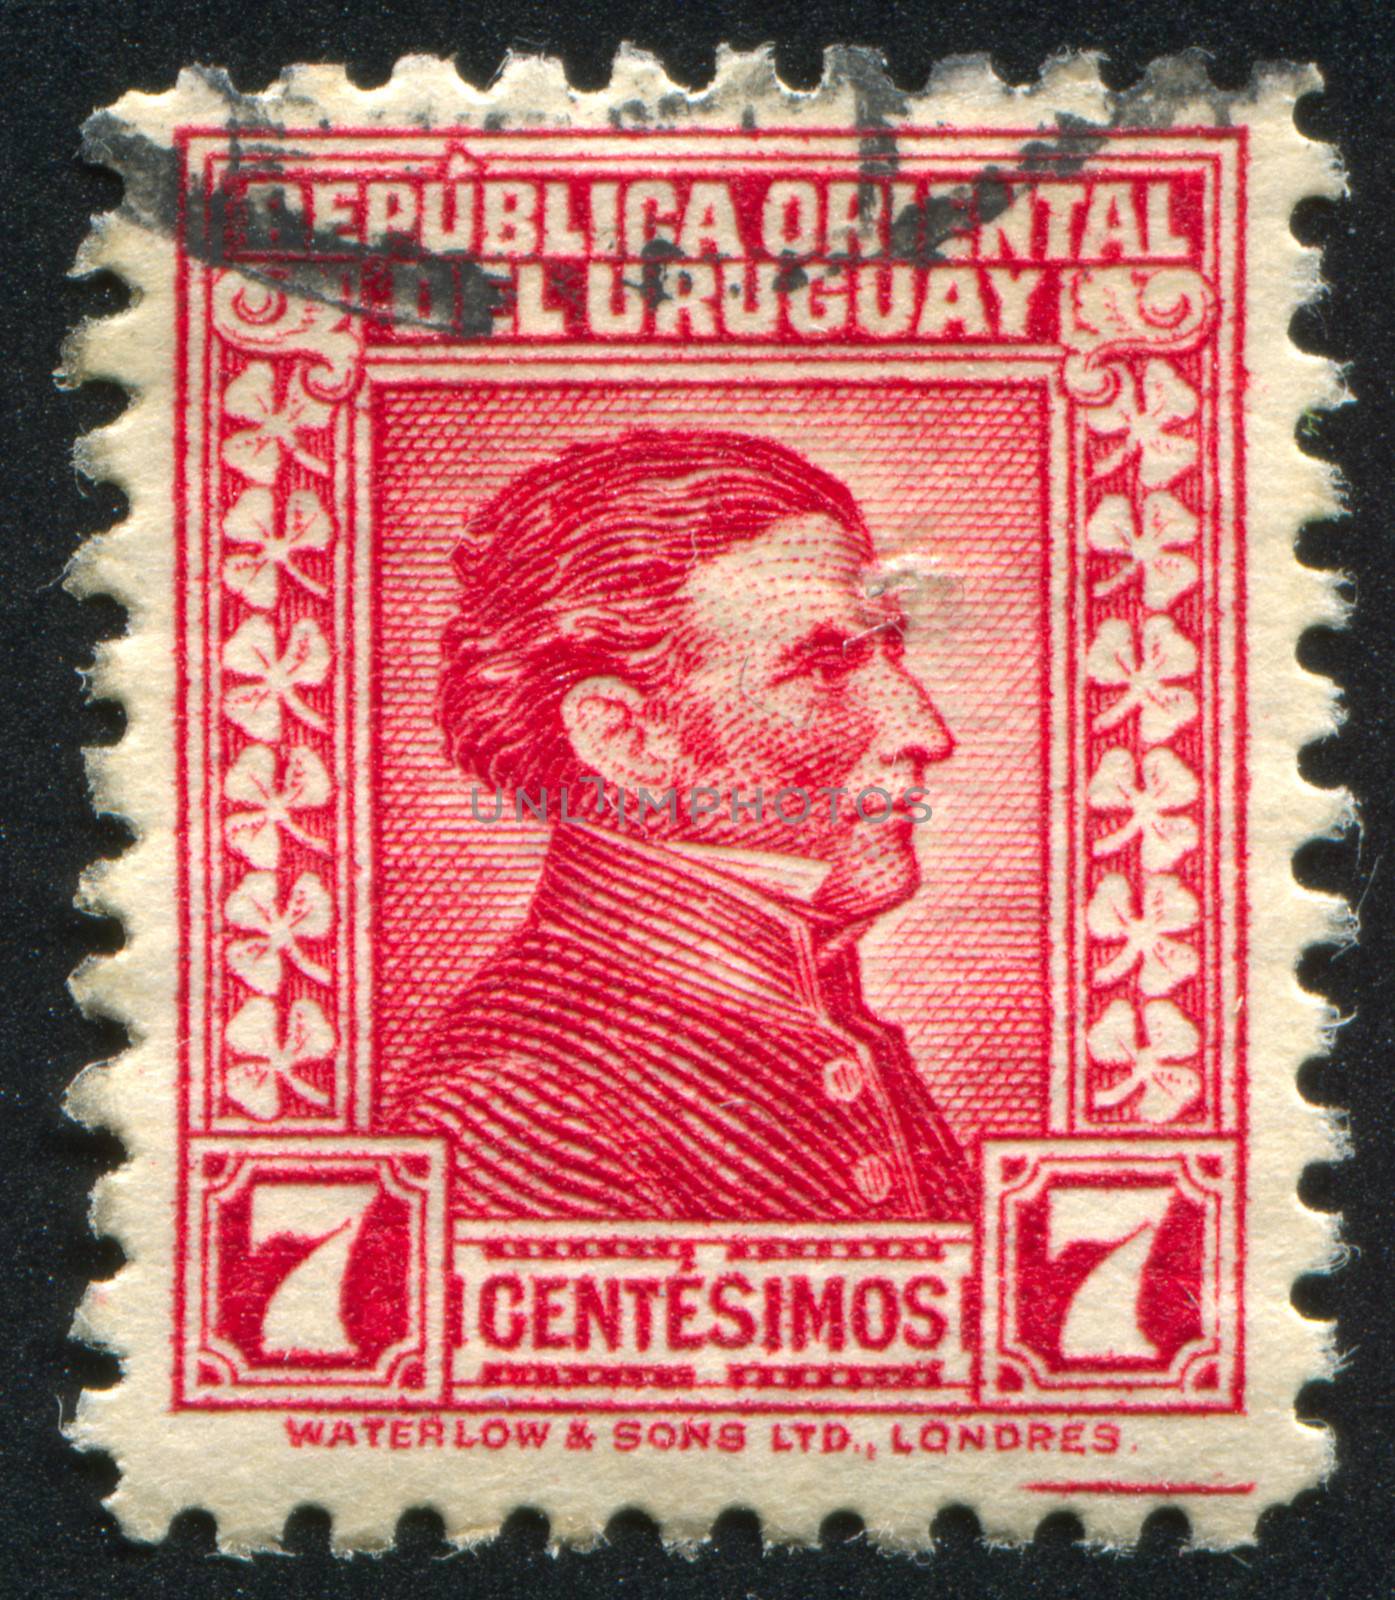 URUGUAY - CIRCA 1928: stamp printed by Uruguay, shows Jose Gervasio Artigas, circa 1928